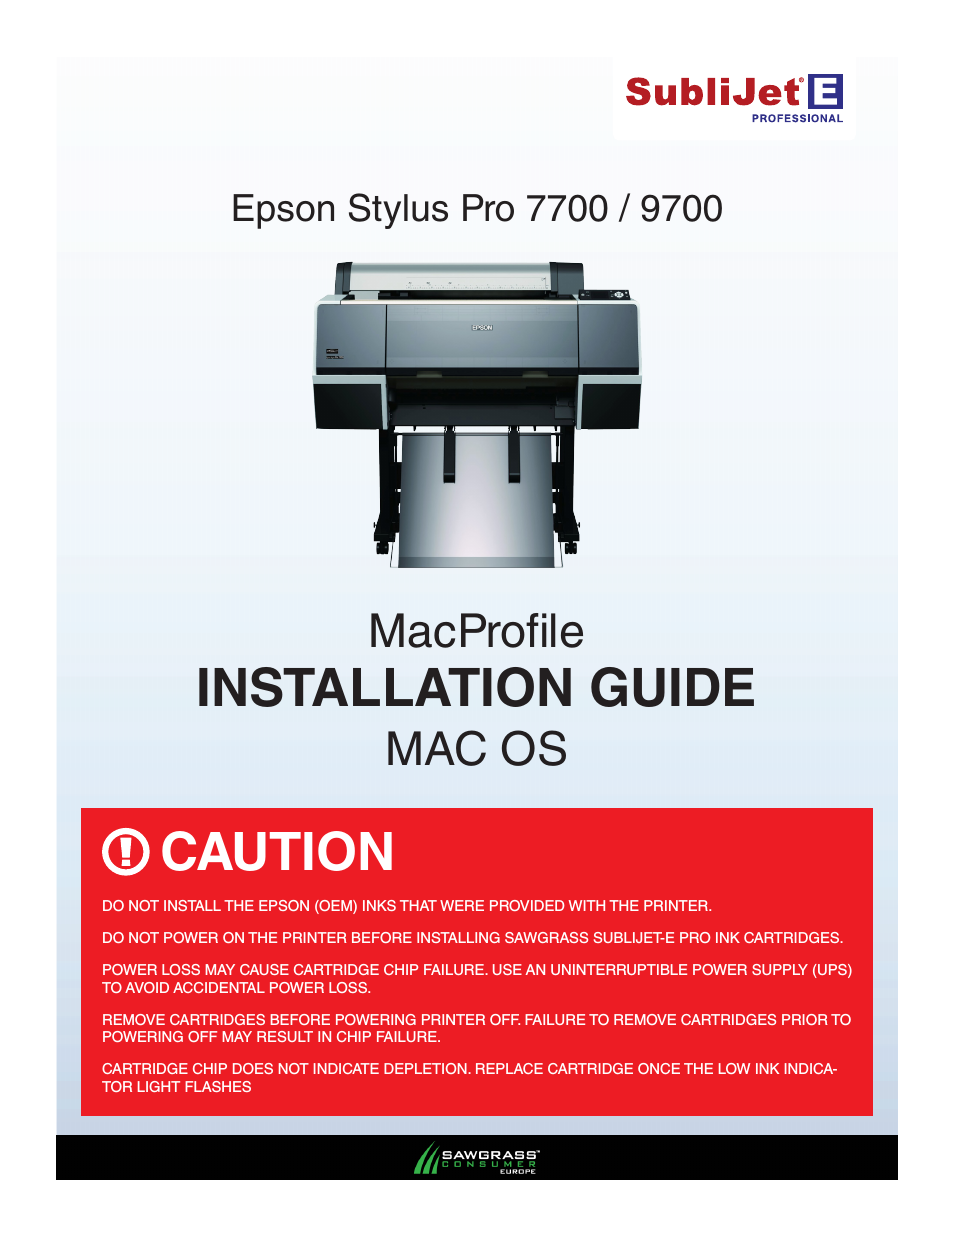 SubliJet E Epson Stylus Pro 7700 (Mac ICC Profile Setup): Printer/Profile Installation Guide